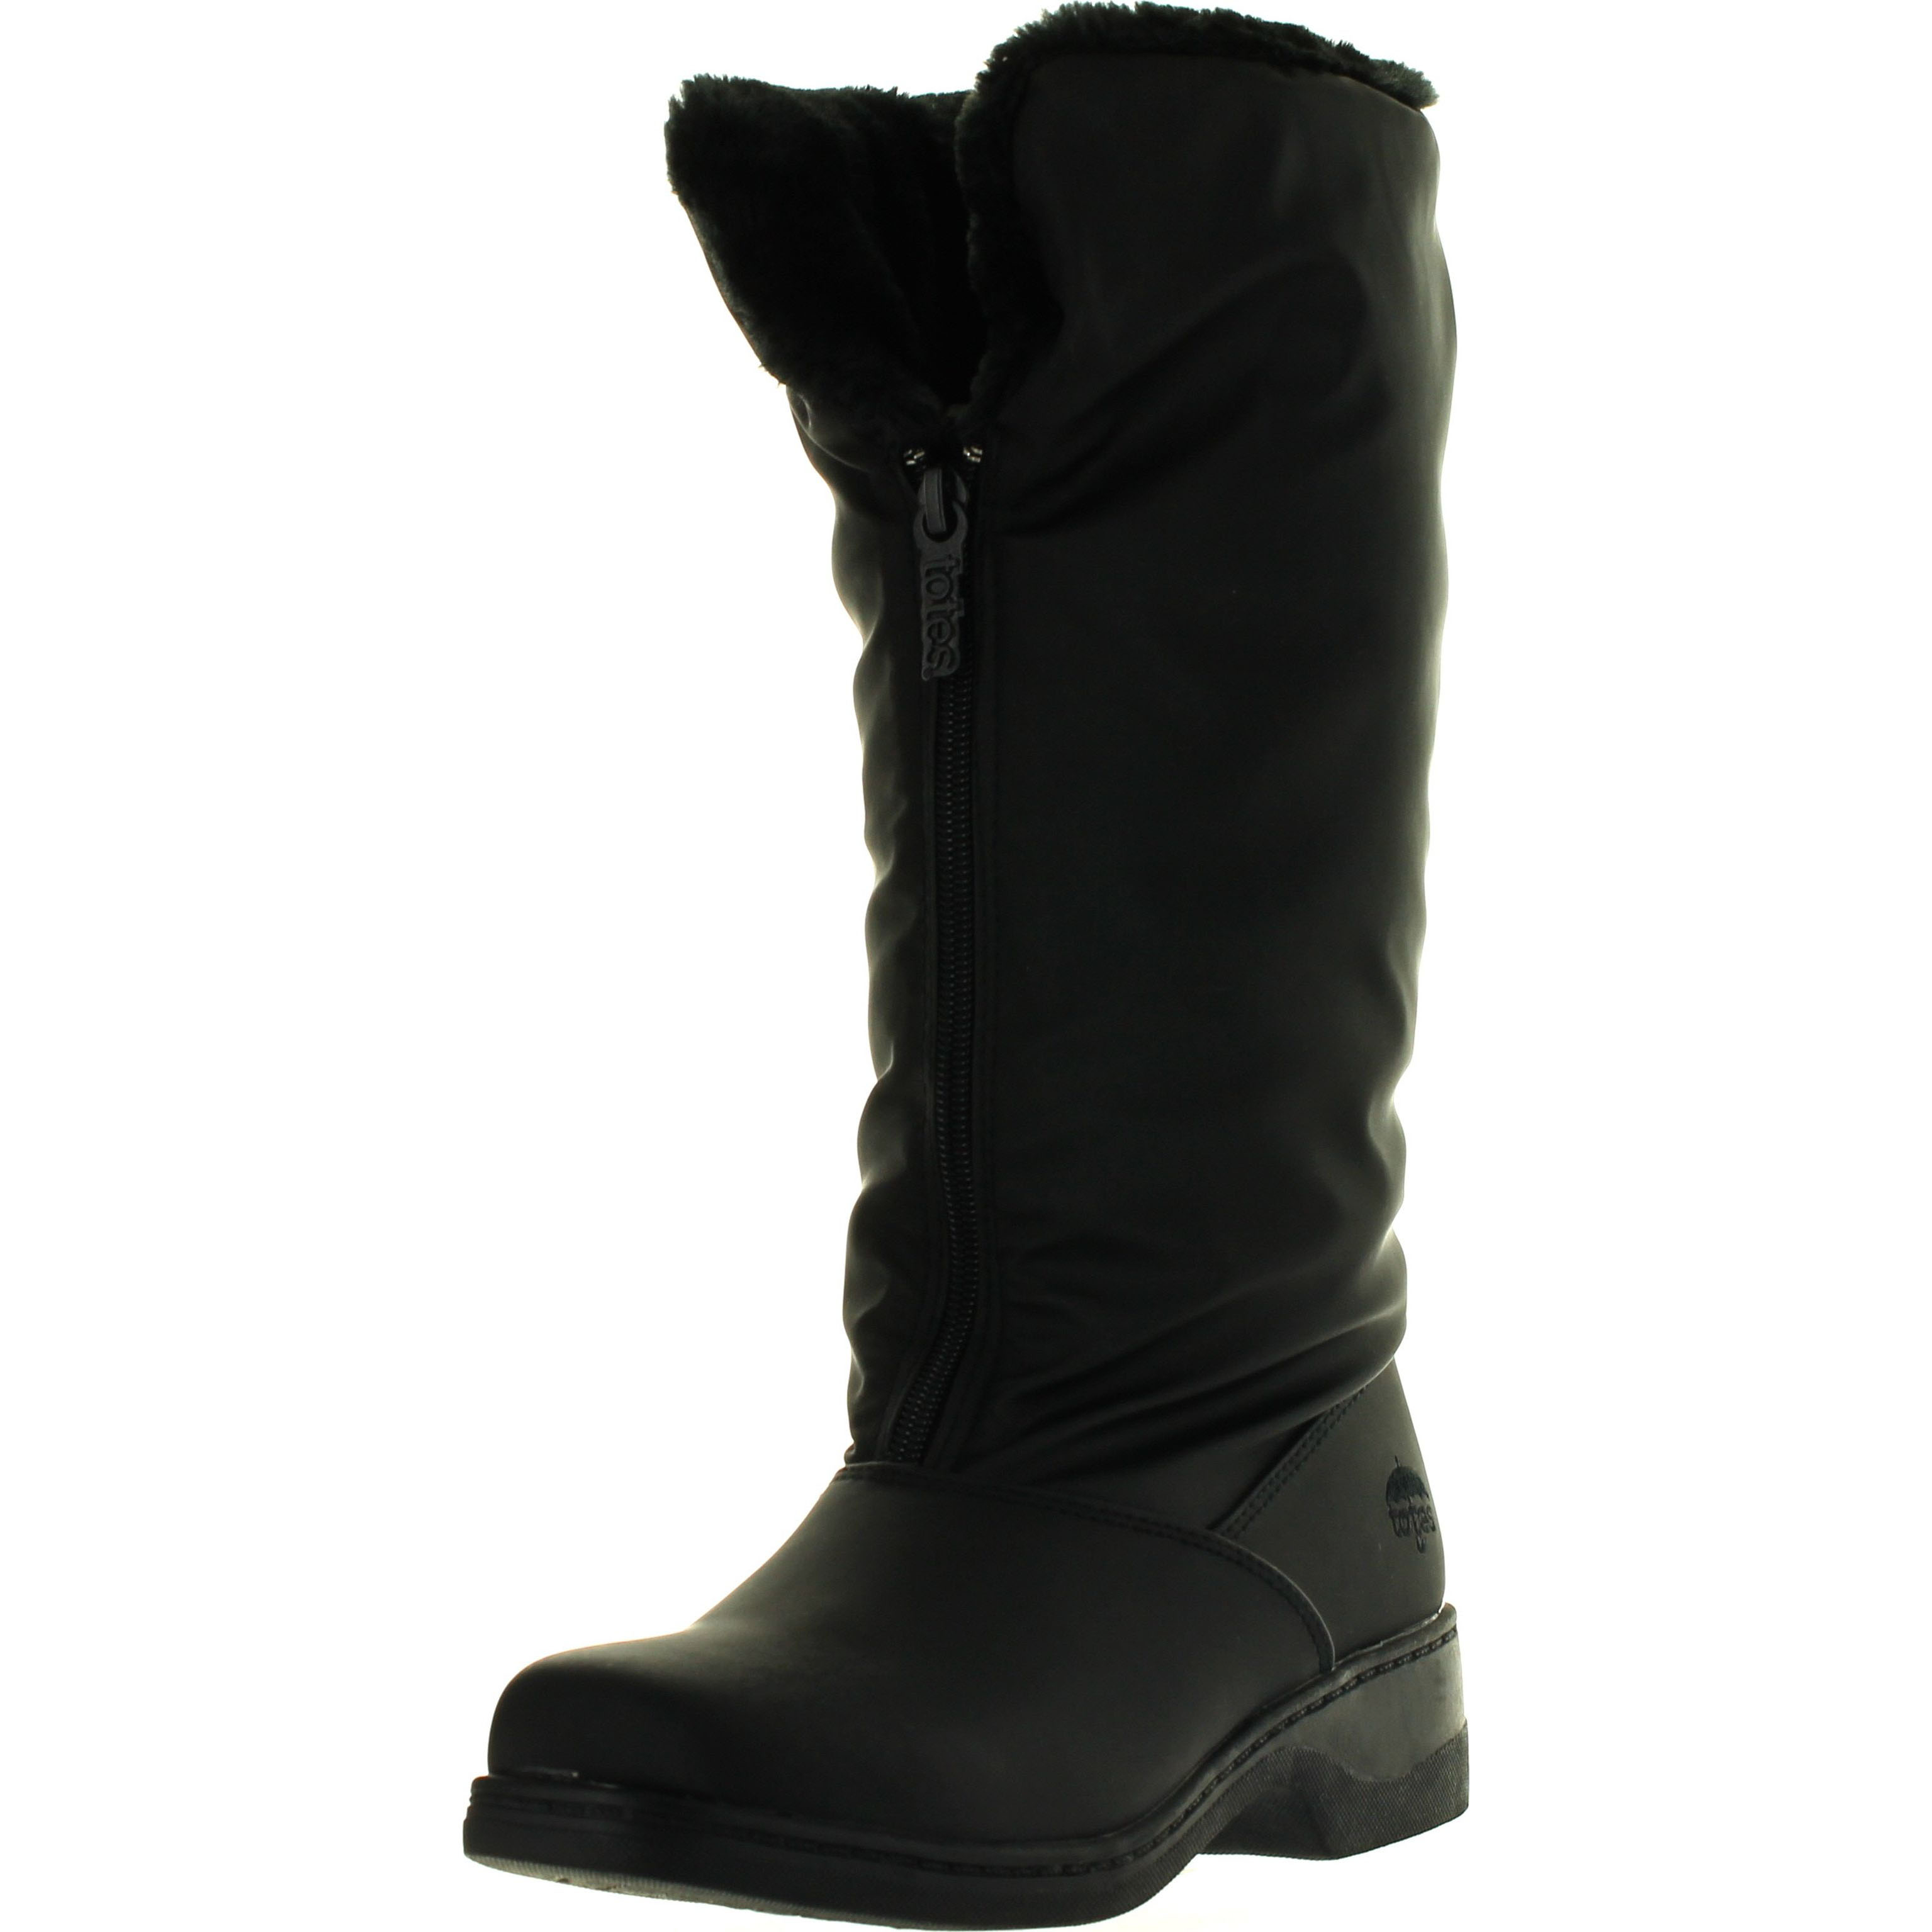 Totes Womens Cynthia Winter Waterproof Snow Boots | eBay